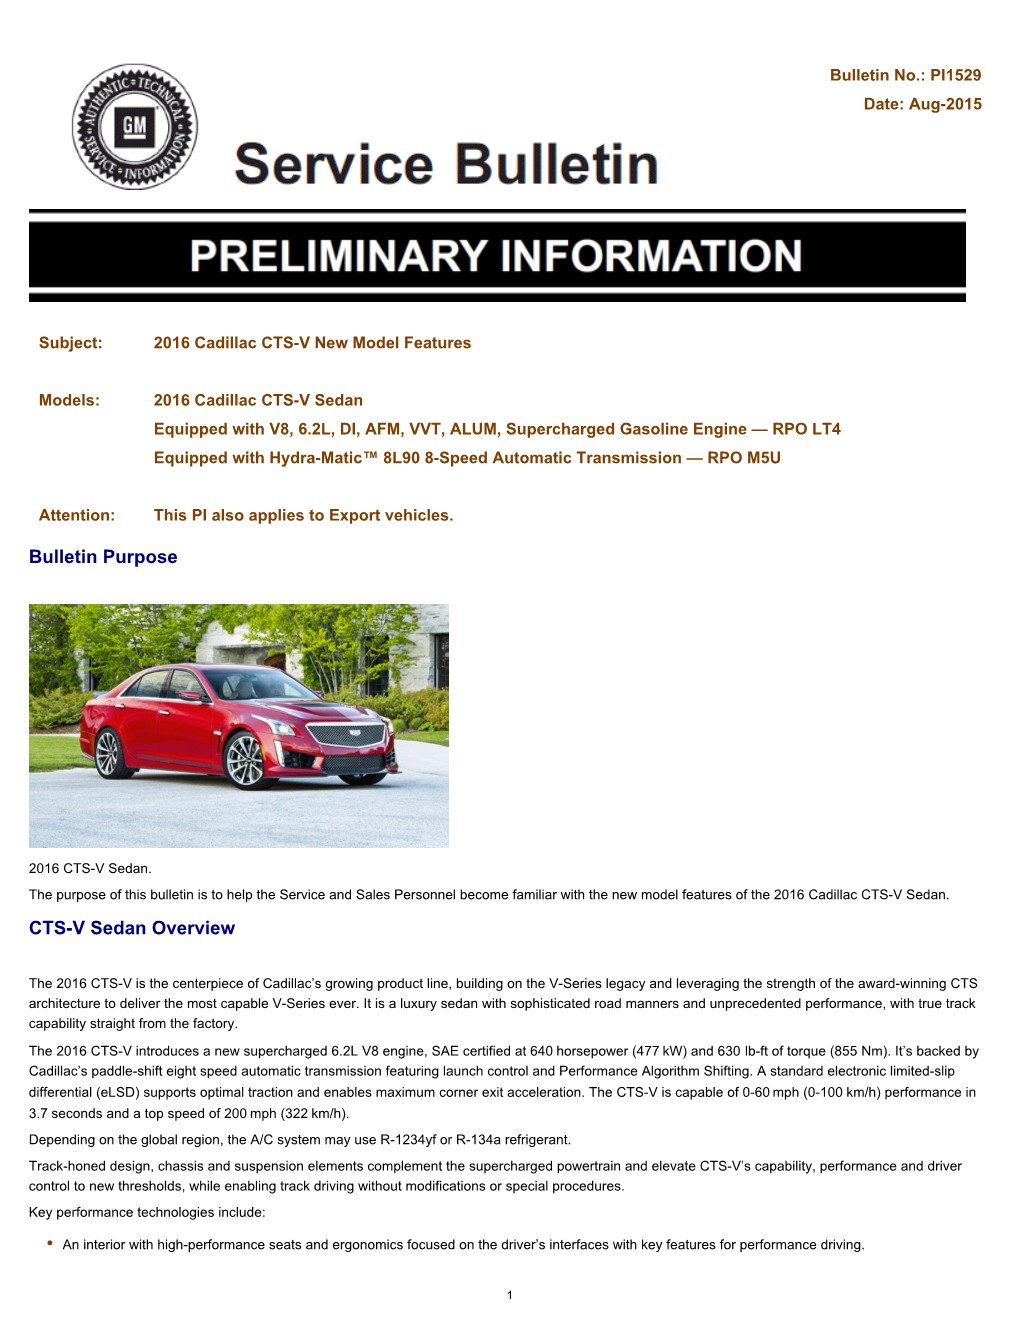 Bulletin Purpose CTS-V Sedan Overview